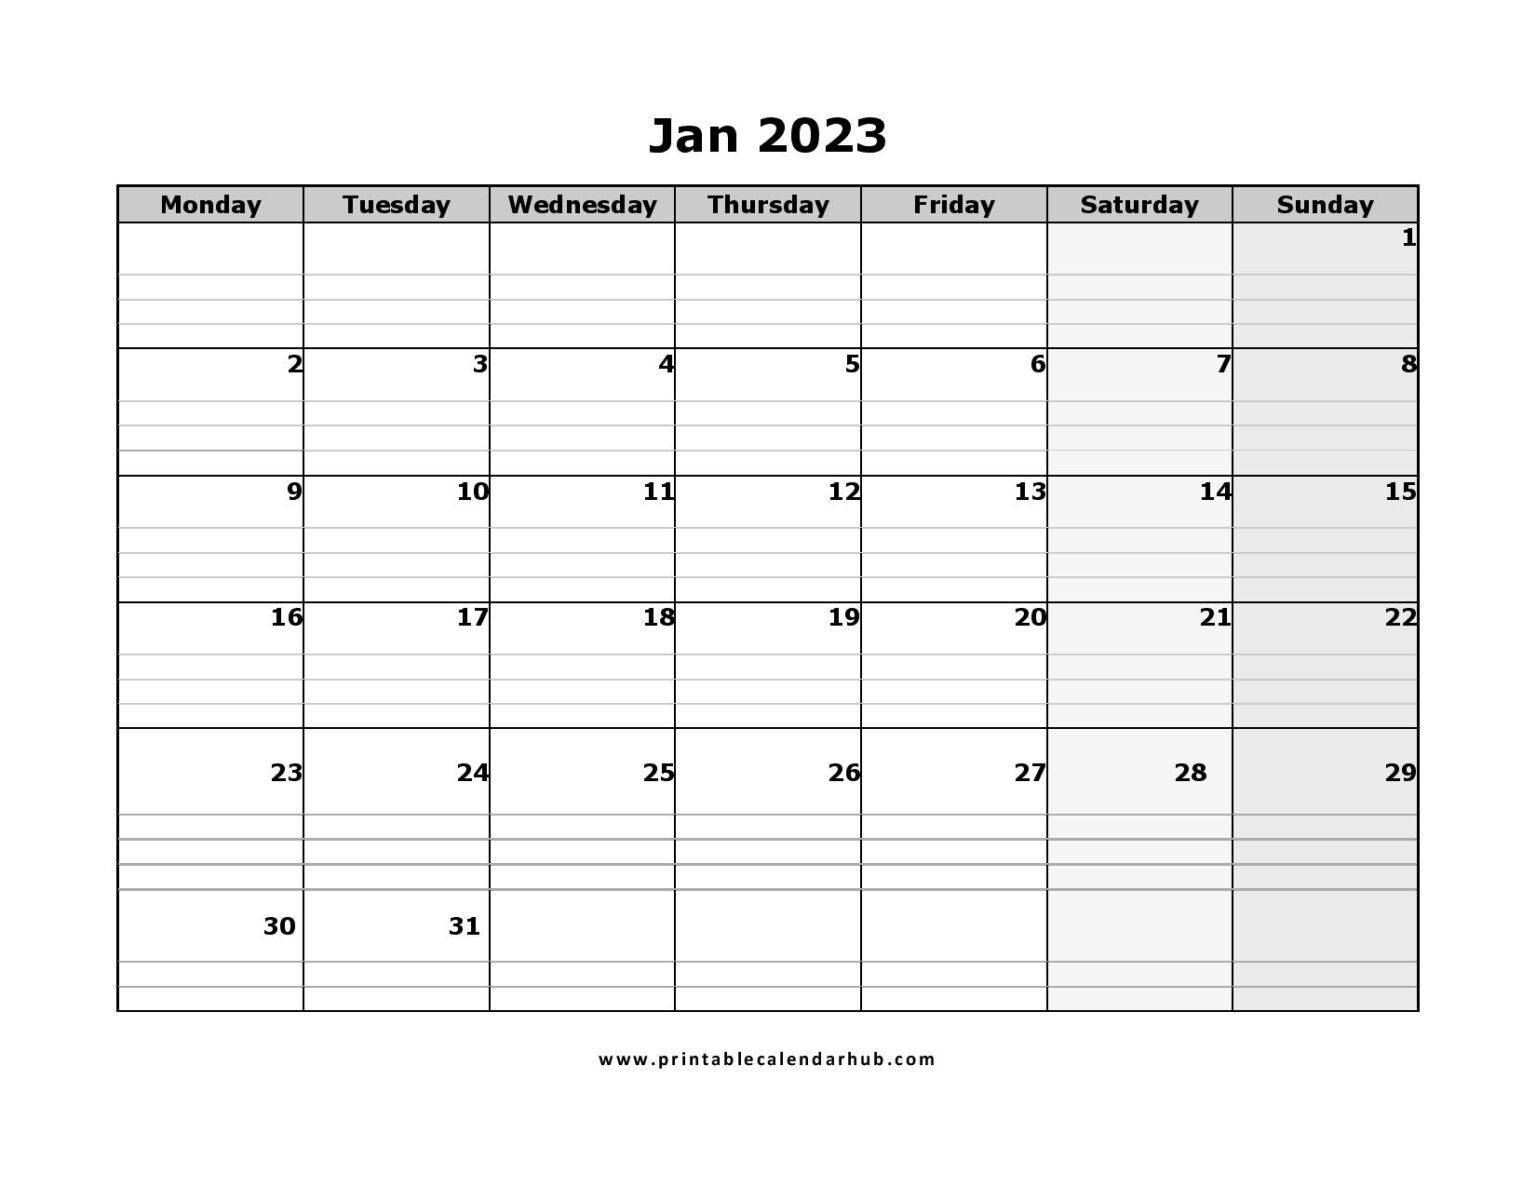 Printable Calendar January 2023 Templates PDF - Printable Calendar Hub